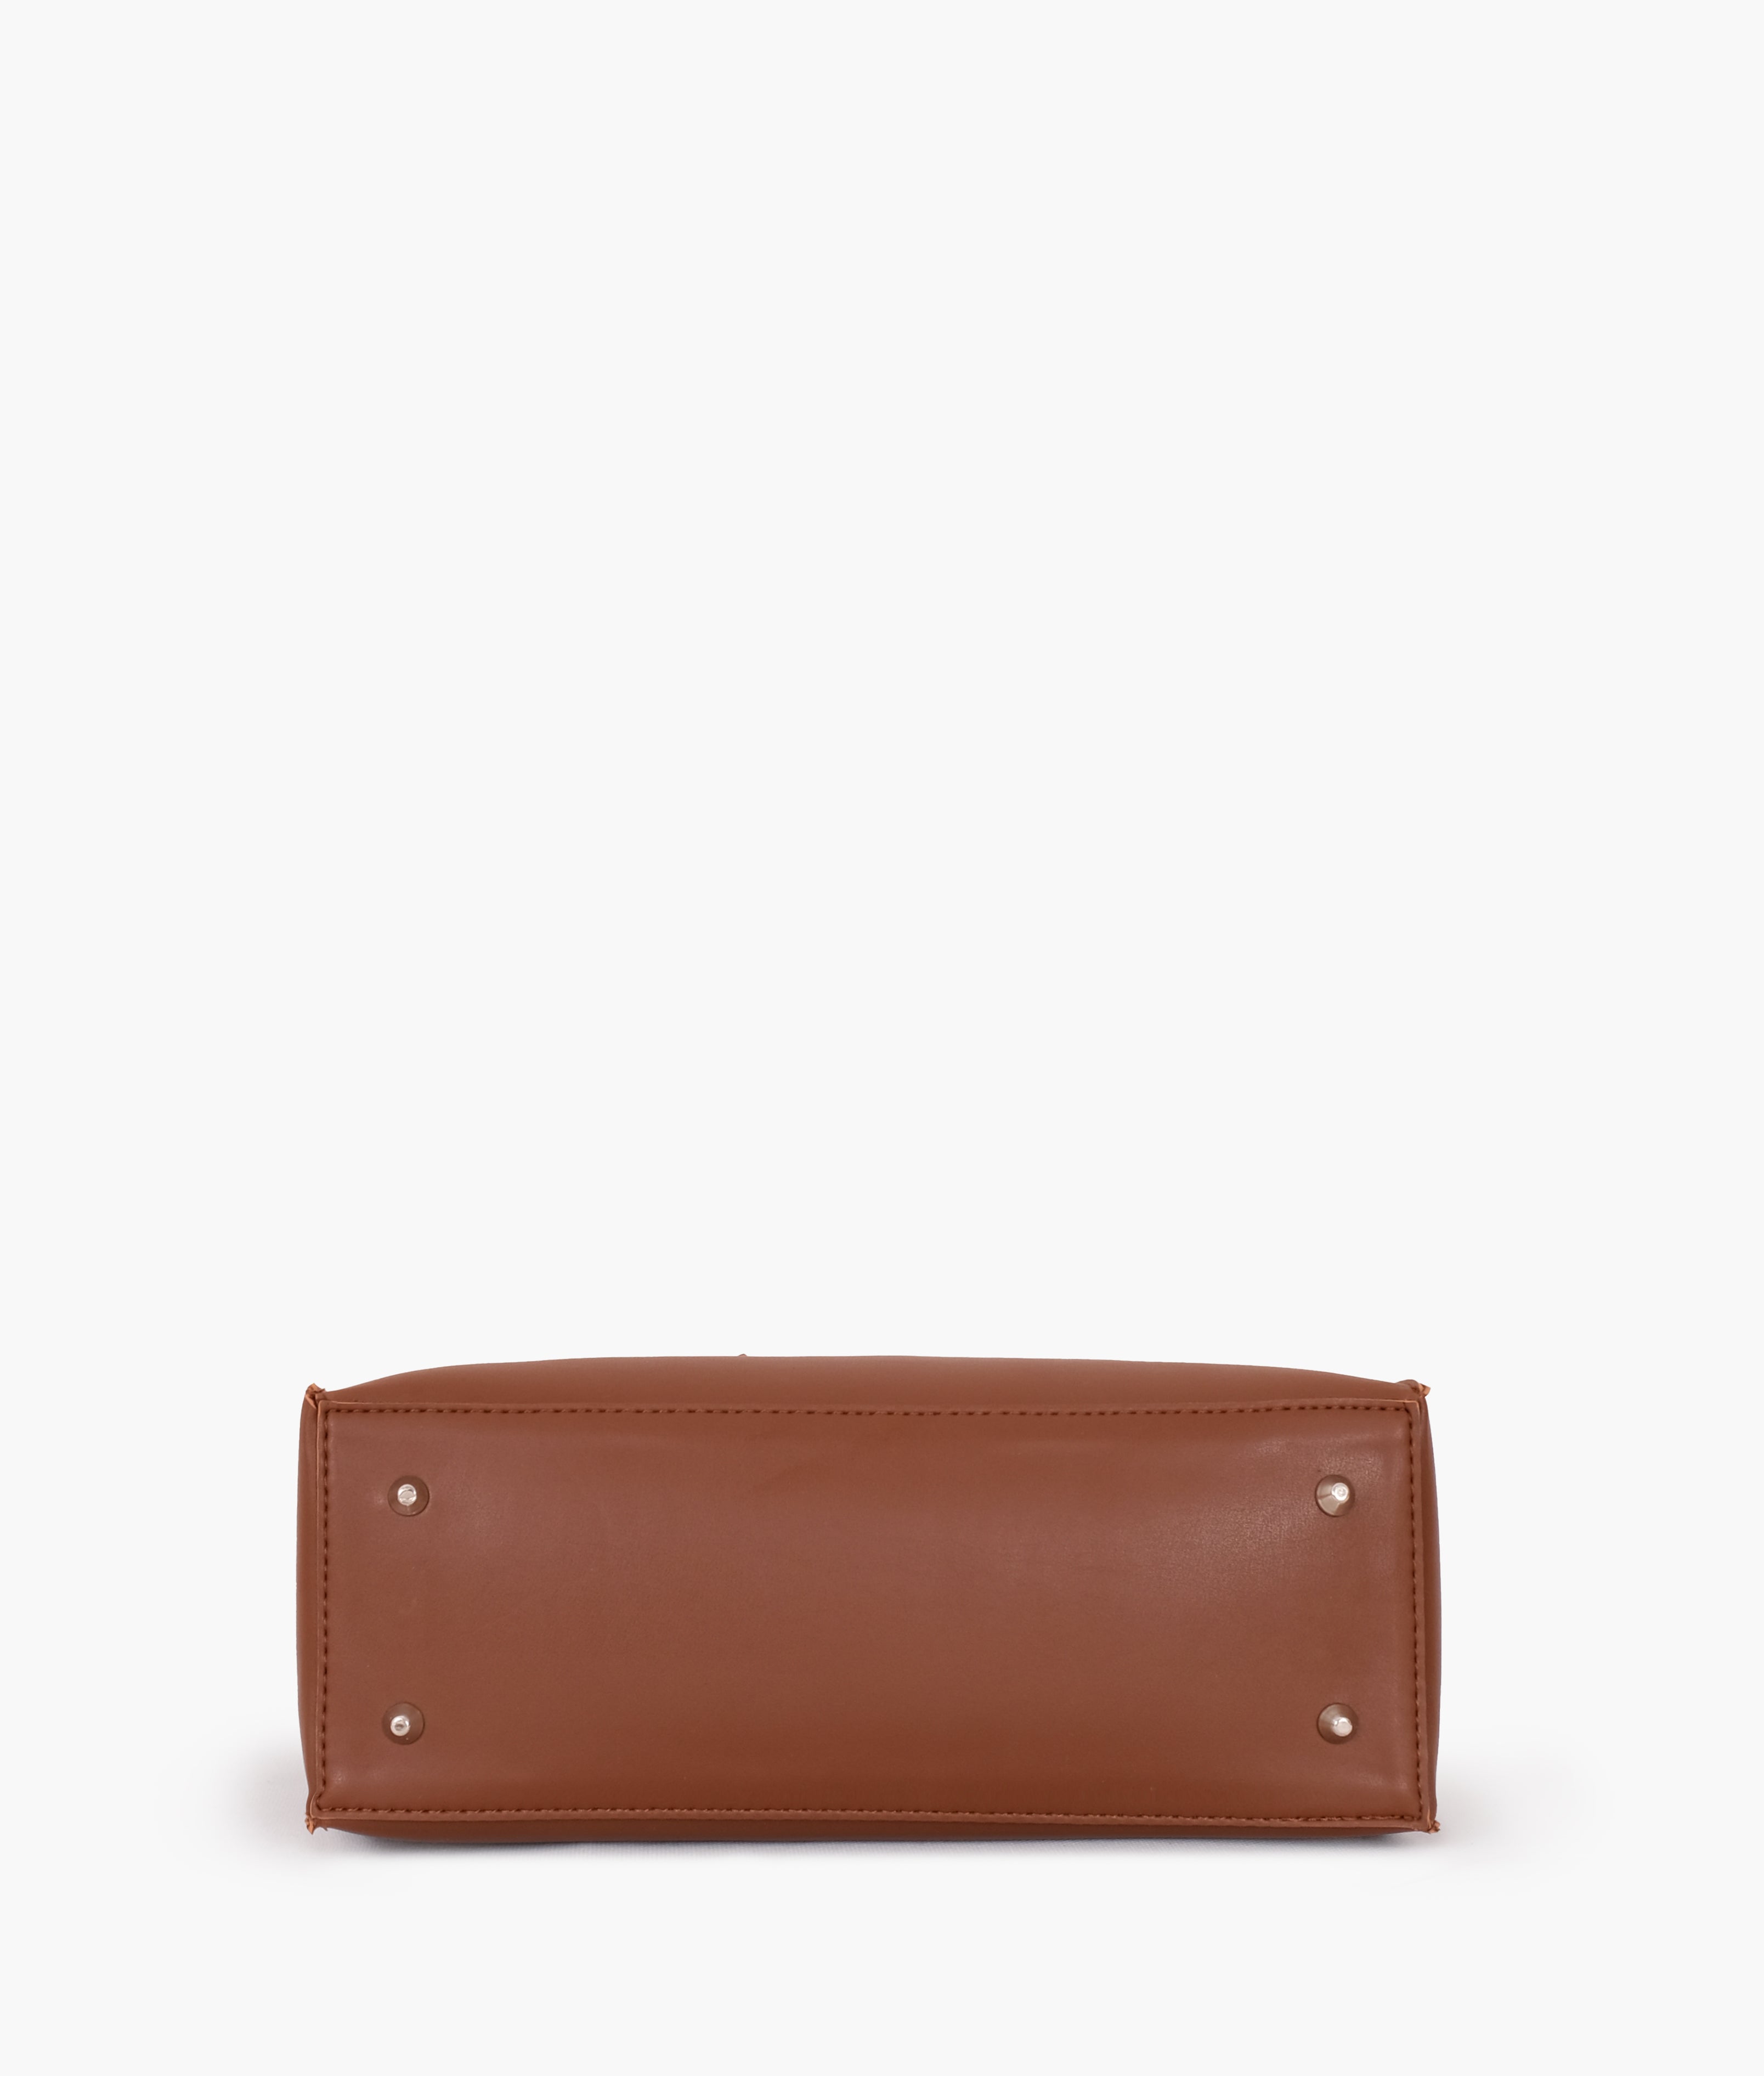 Brown satchel tote bag – Trendy Totes